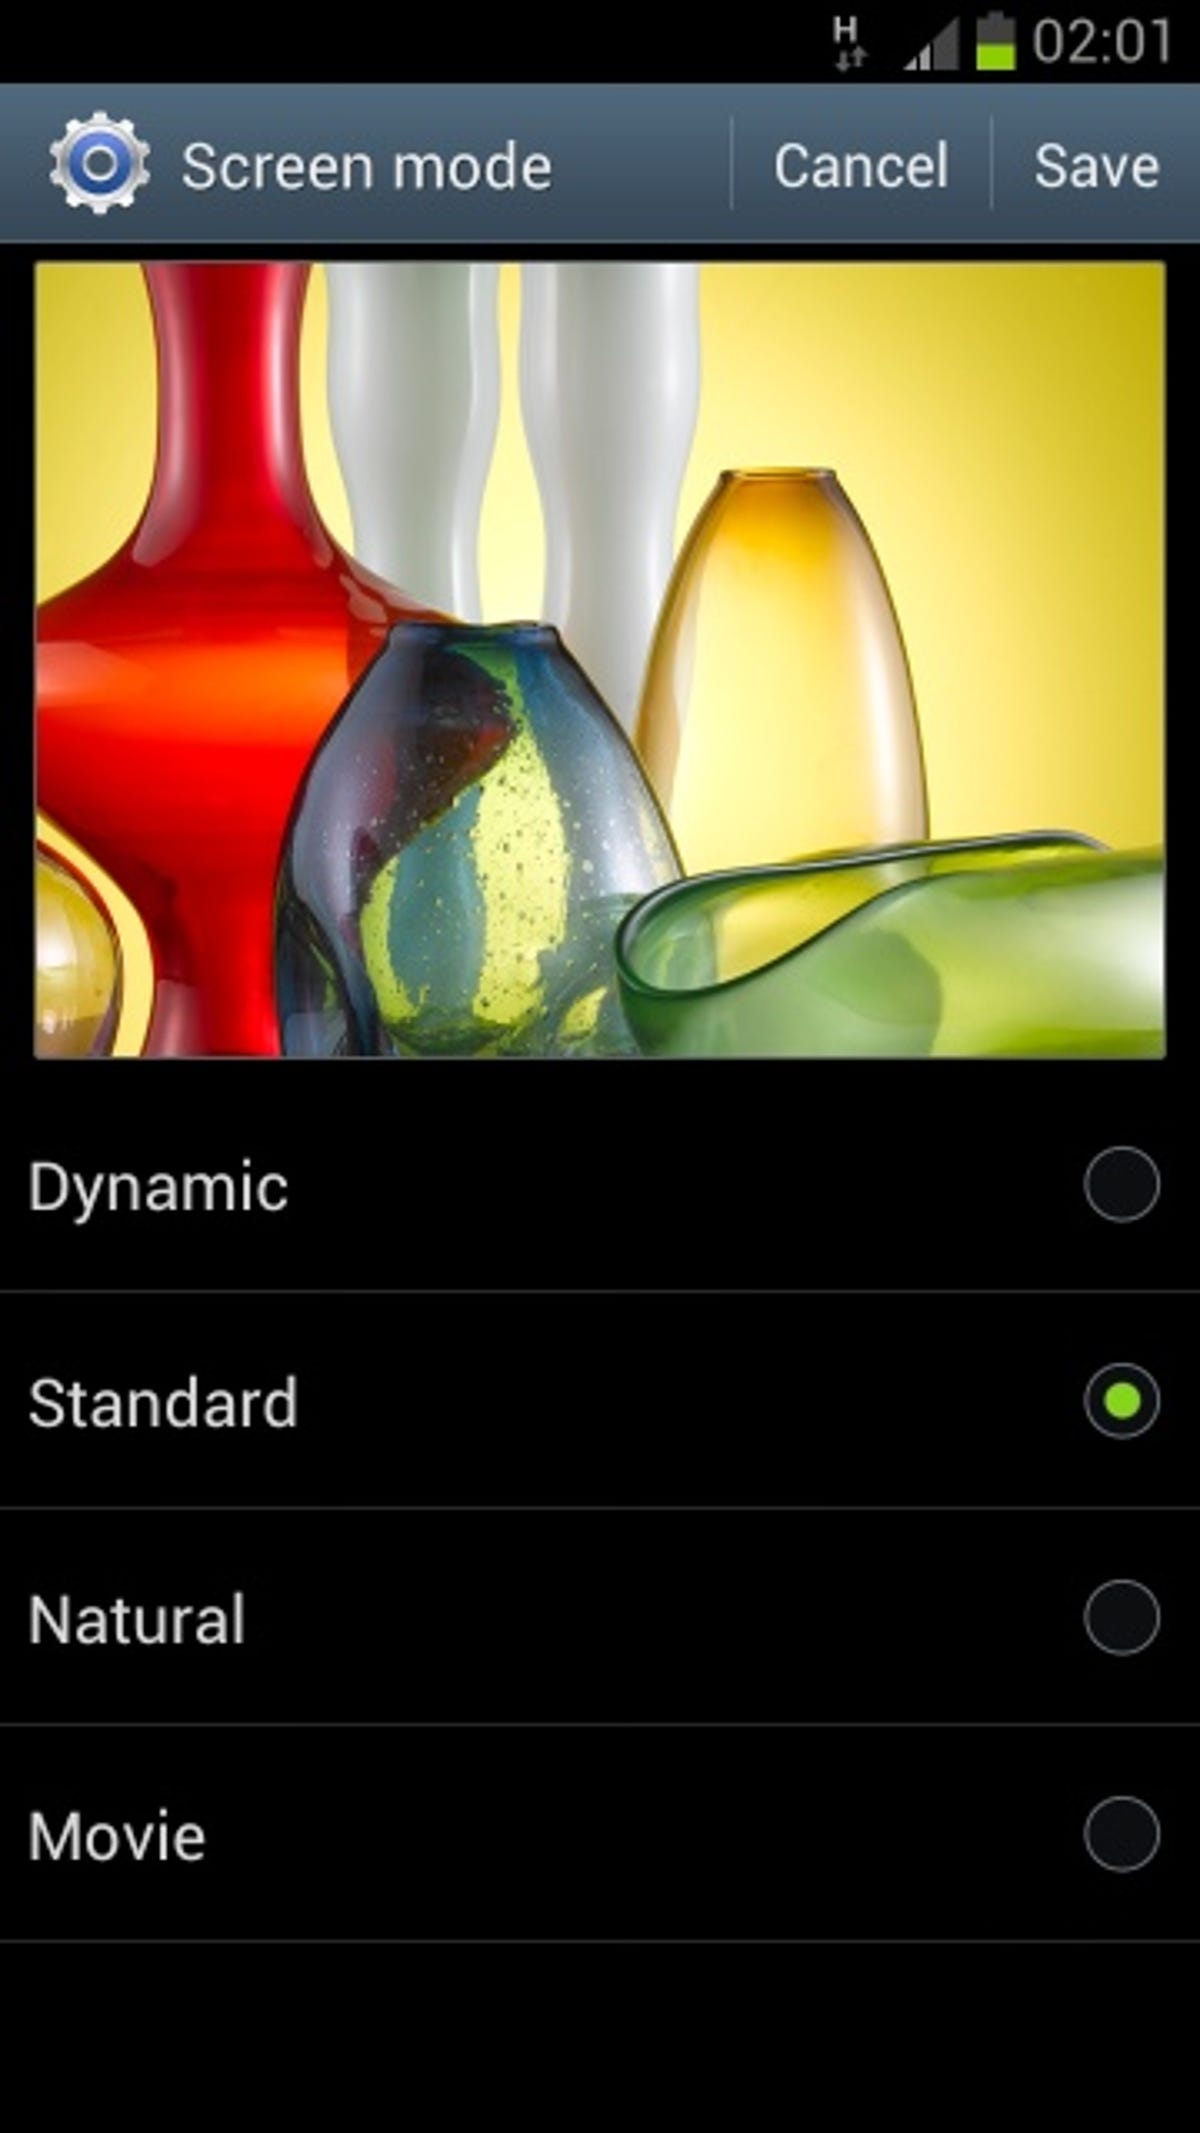 Samsung Galaxy S3 battery life: screen mode